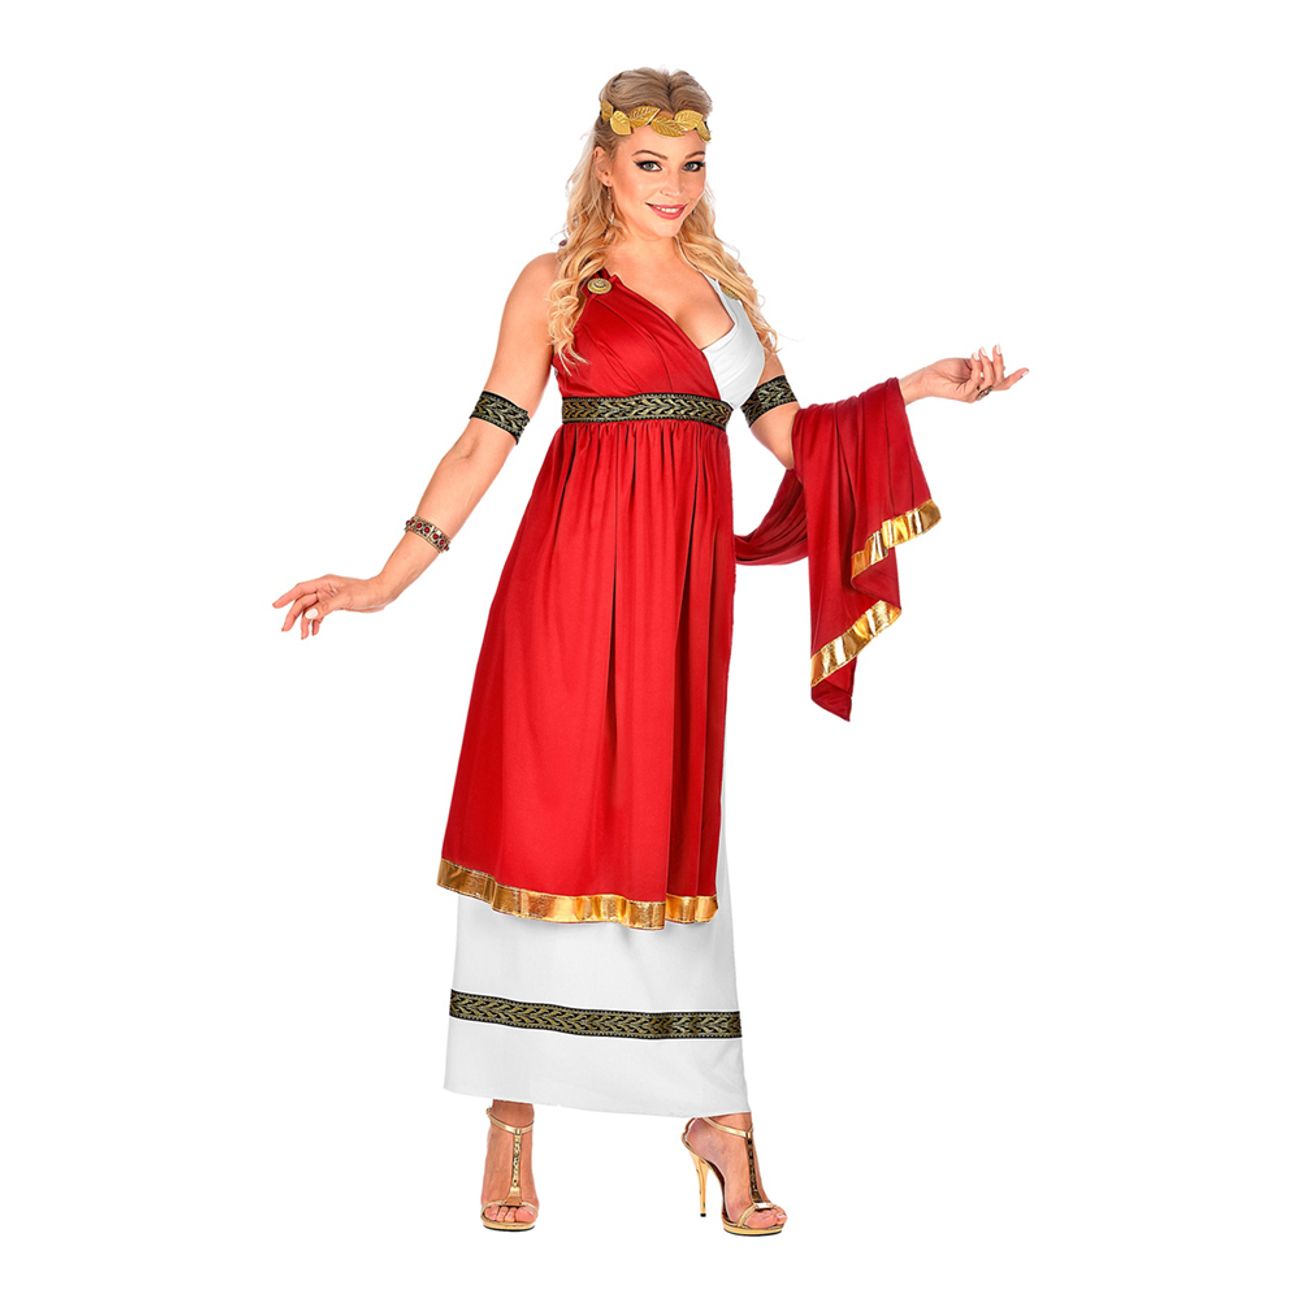 romersk-kejsarinna-maskeraddrakt3-4